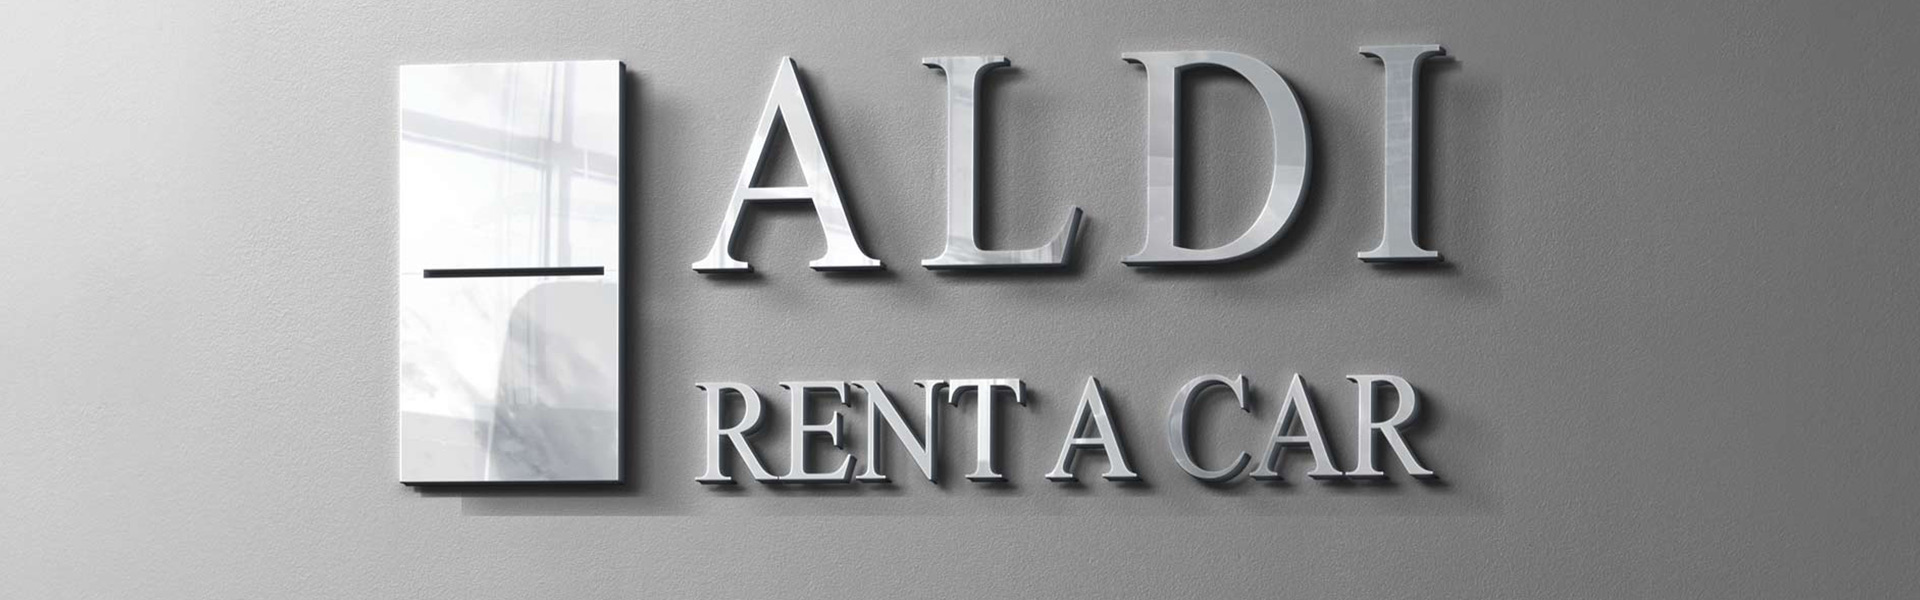 Royal Car Rental Group | Rent a car Beograd ALDI | Royal Car Rental Group